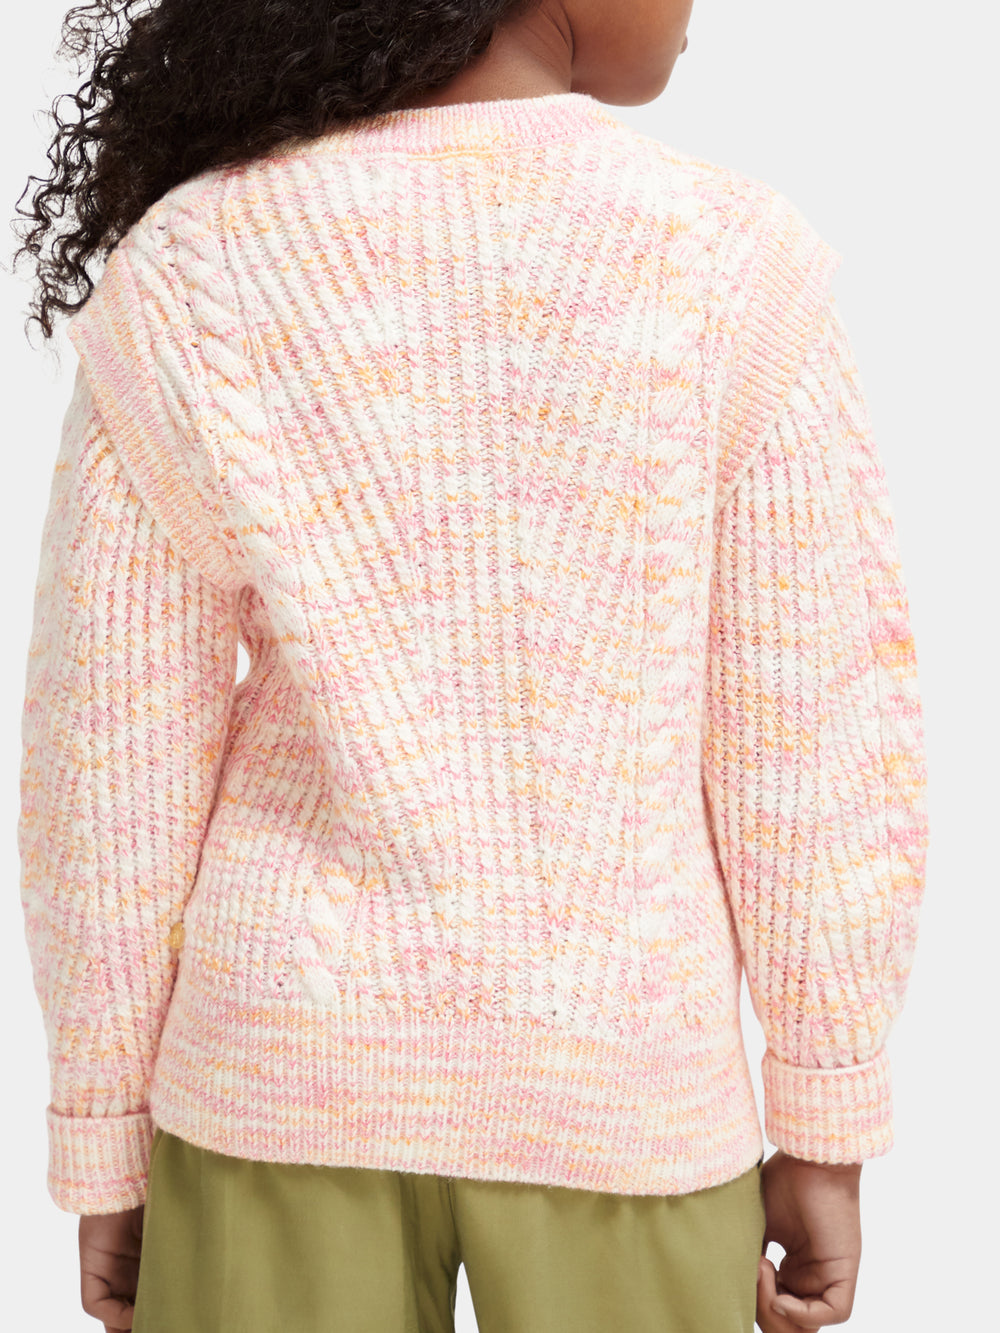 Knitted sweater - Scotch & Soda AU